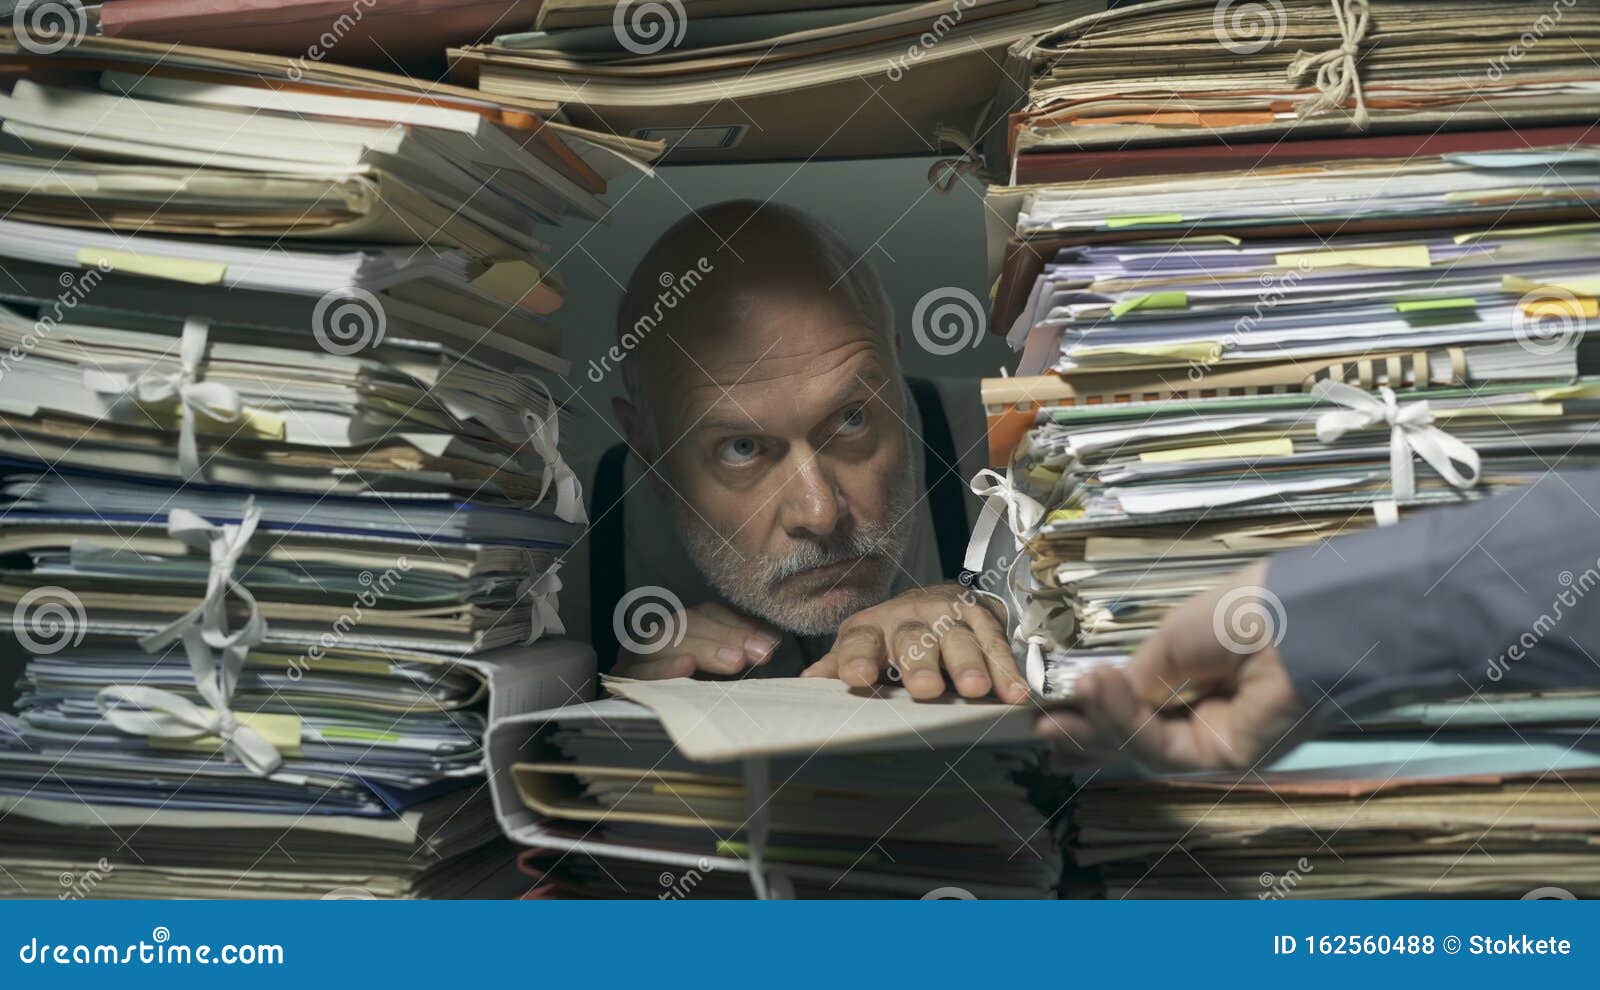 creepy office clerk overloaded with paperwork